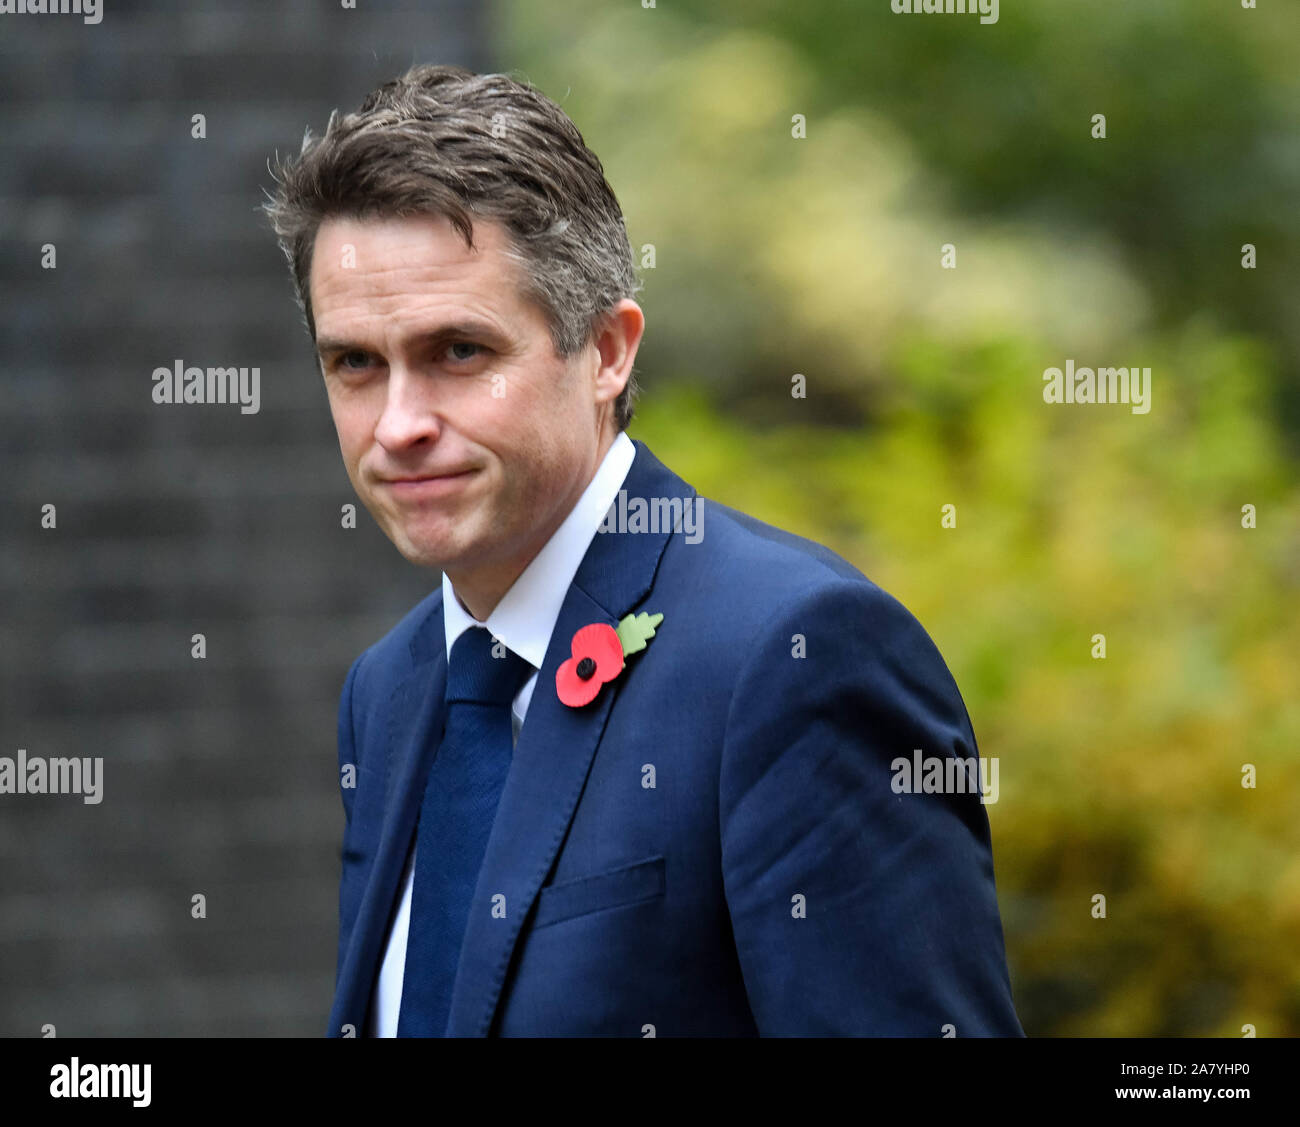 London UK 5 Nov 2019, Gavin Williamson MP PC Ausbildung Sekretärin kommt an einer Kabinettssitzung am 10 Downing Street, London Credit Ian Davidson/Alamy leben Nachrichten Stockfoto